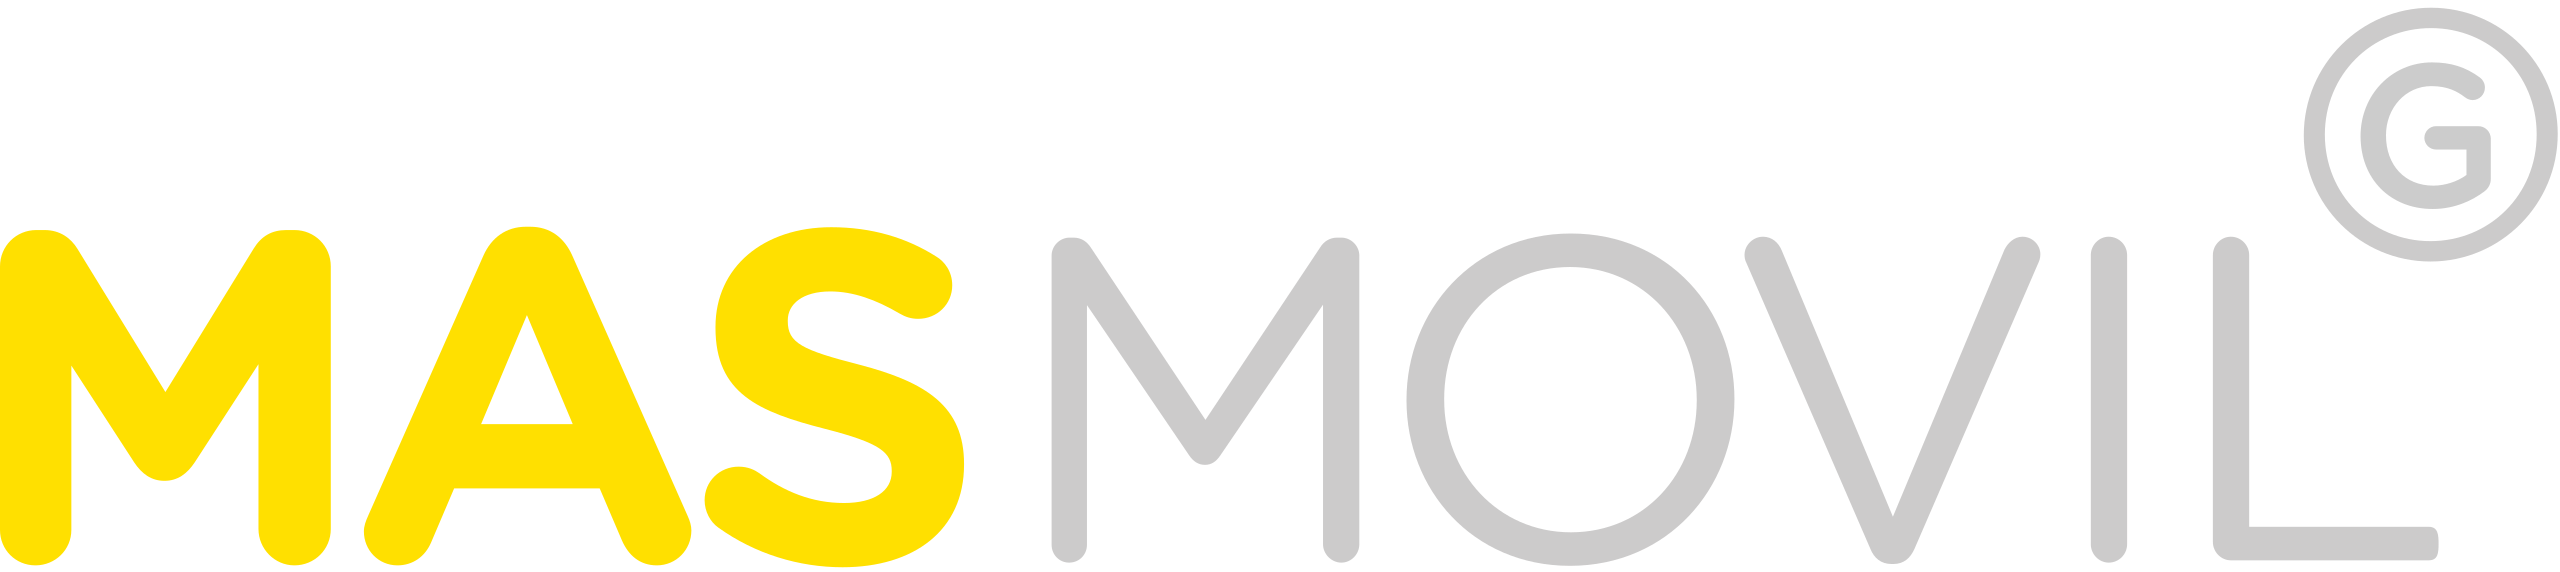 Grupo_MASMOVIL_logo_2018.svg